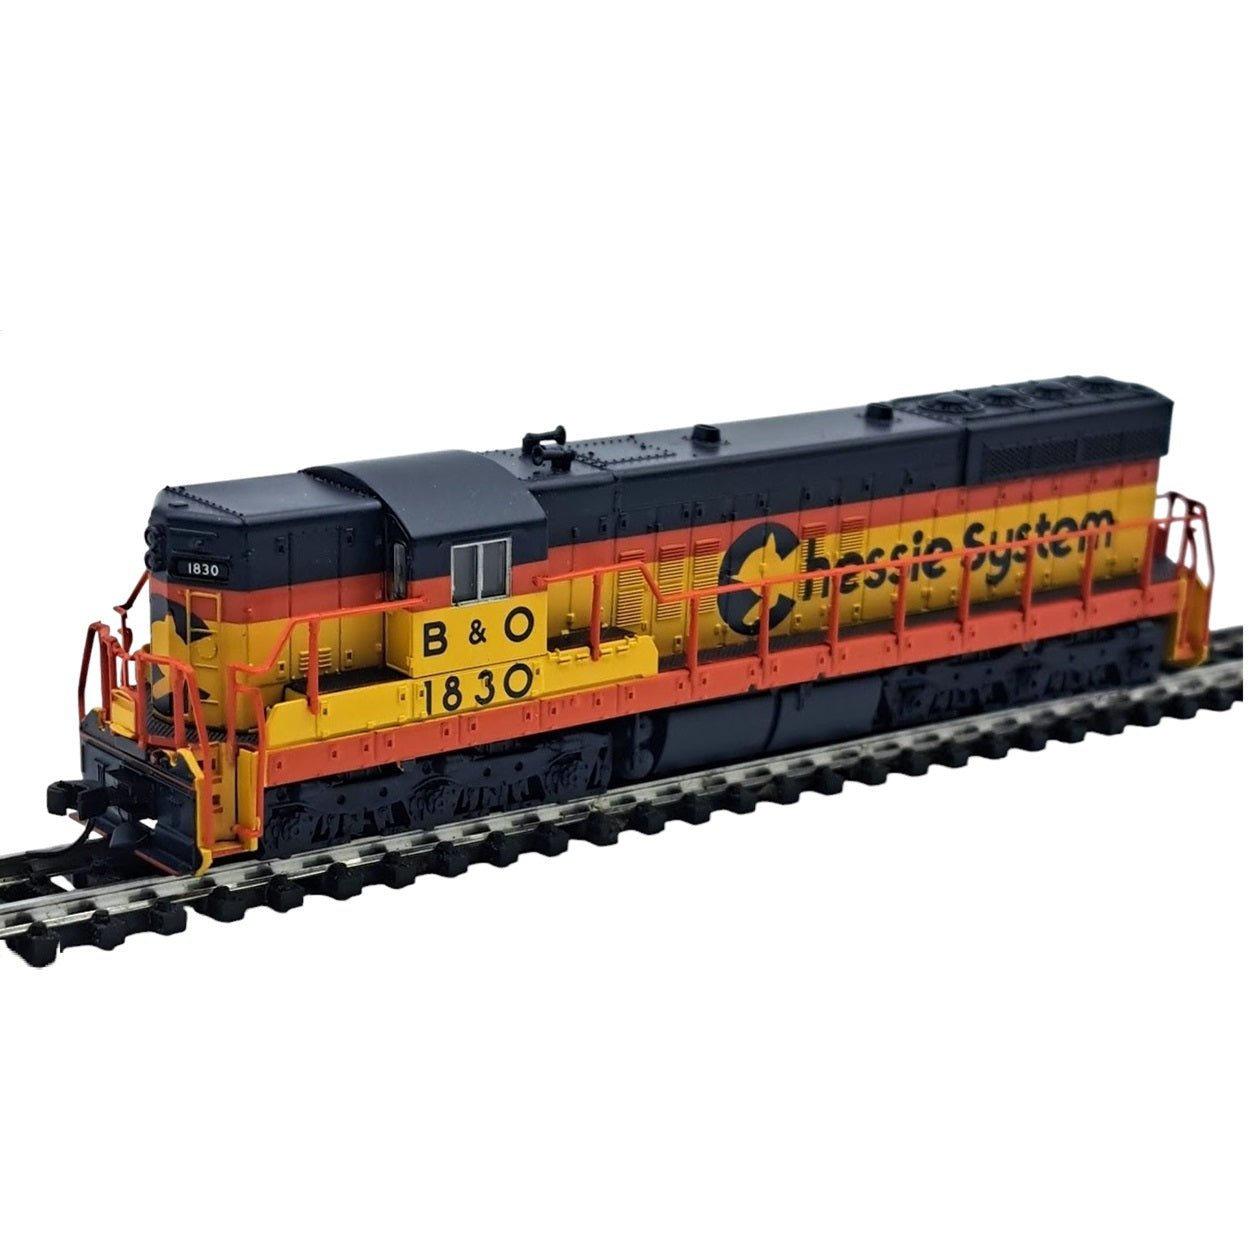 Atlas Classic® Silver Sound Ready SD - 7/9 Locomotive - Baltimore & Ohio (Chessie System) 1830, N Scale - Micro - Mark Locomotives